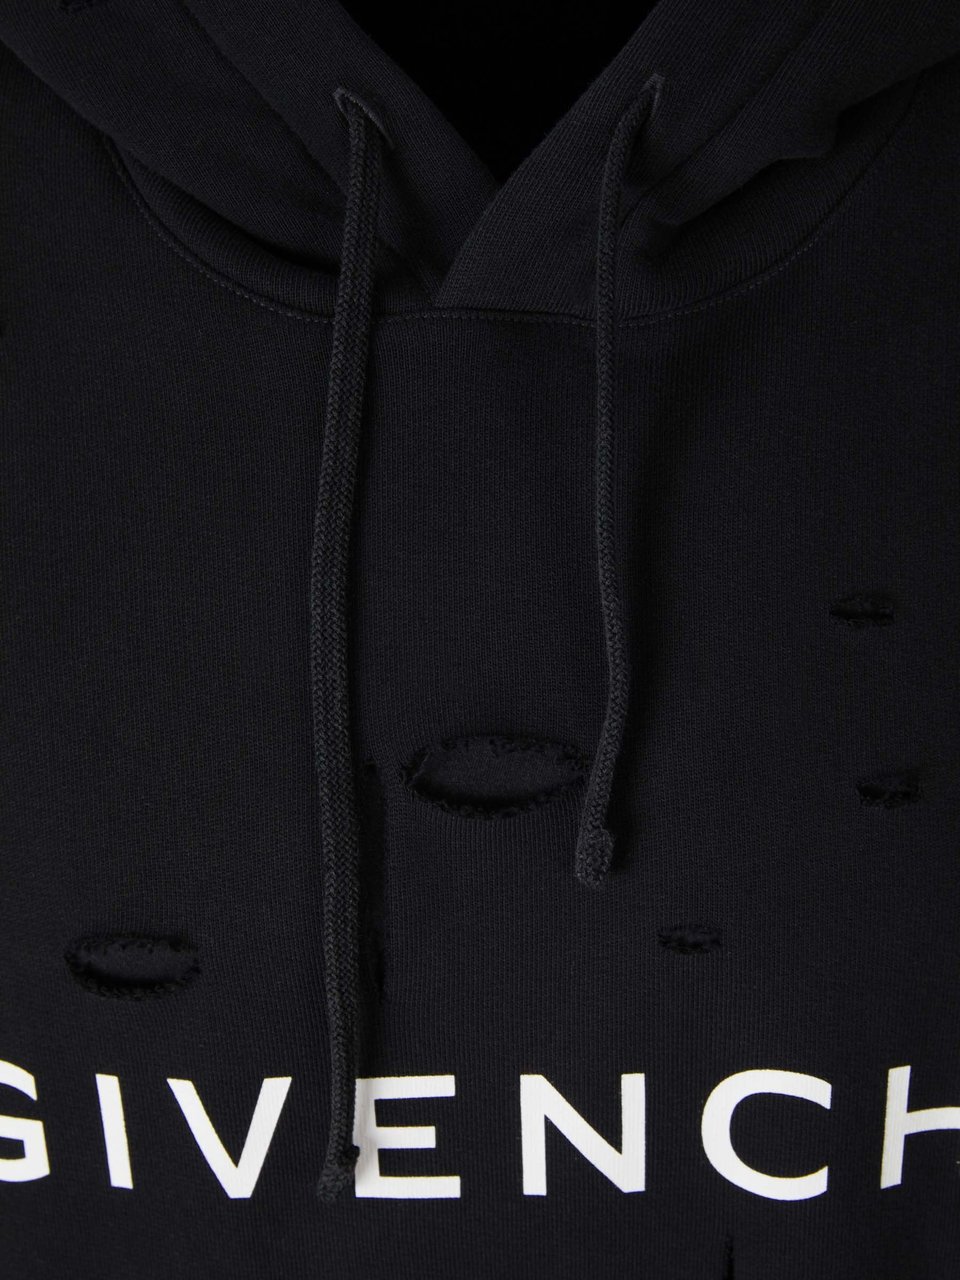 Givenchy Ripped Cotton Sweatshirt Zwart